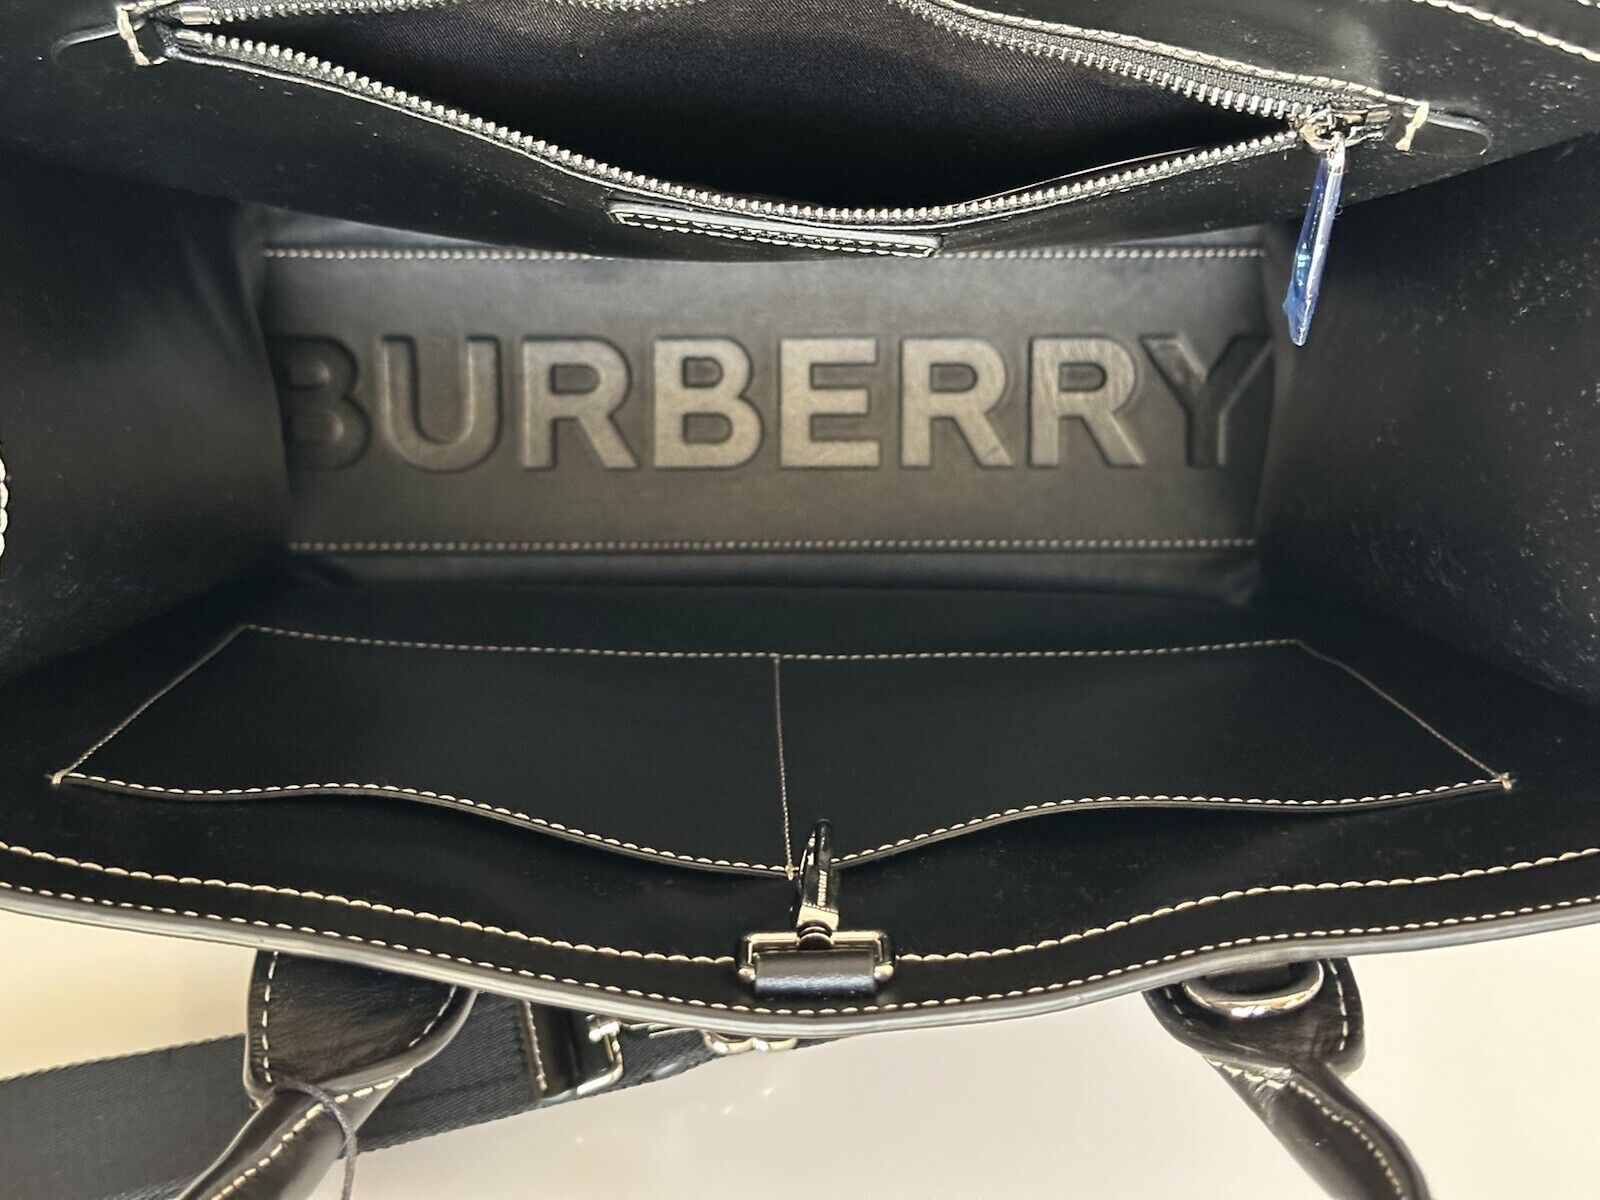 Burberry Denny Tote House Check Shoulder Bag Navy Blue 80594571 NWT $1650 Italy